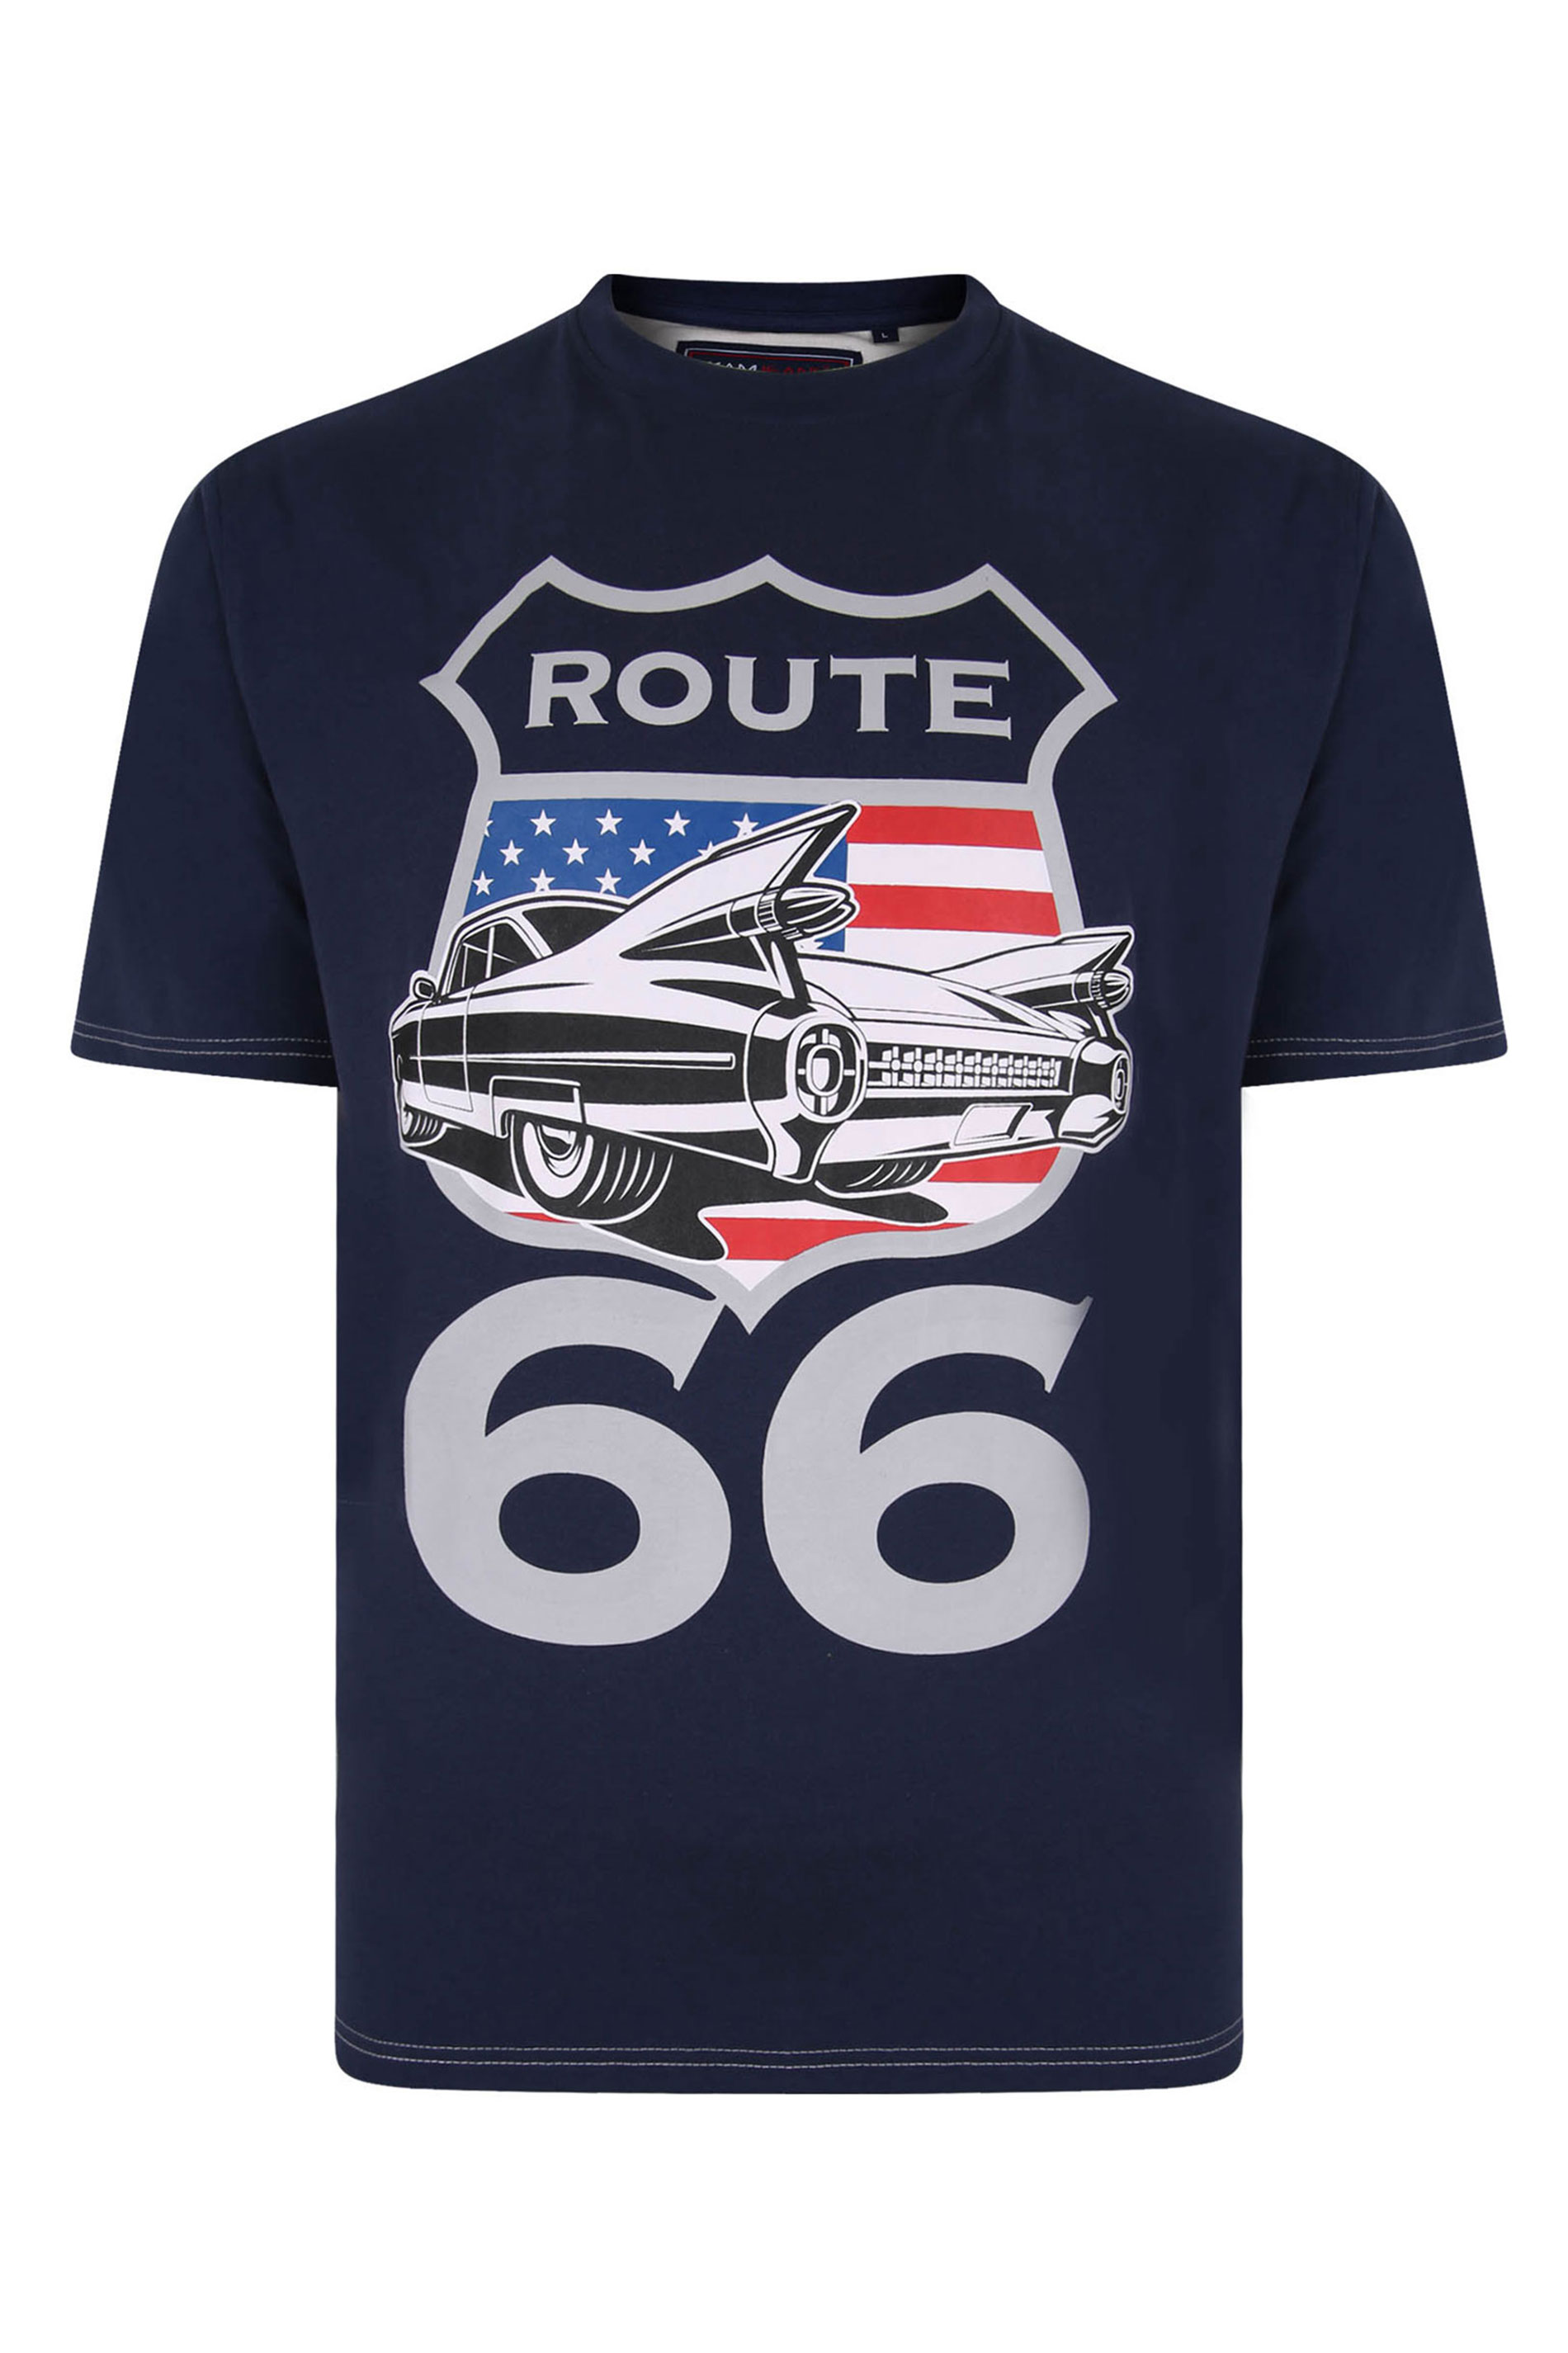 KAM Navy Route 66 T-Shirt_F.jpg